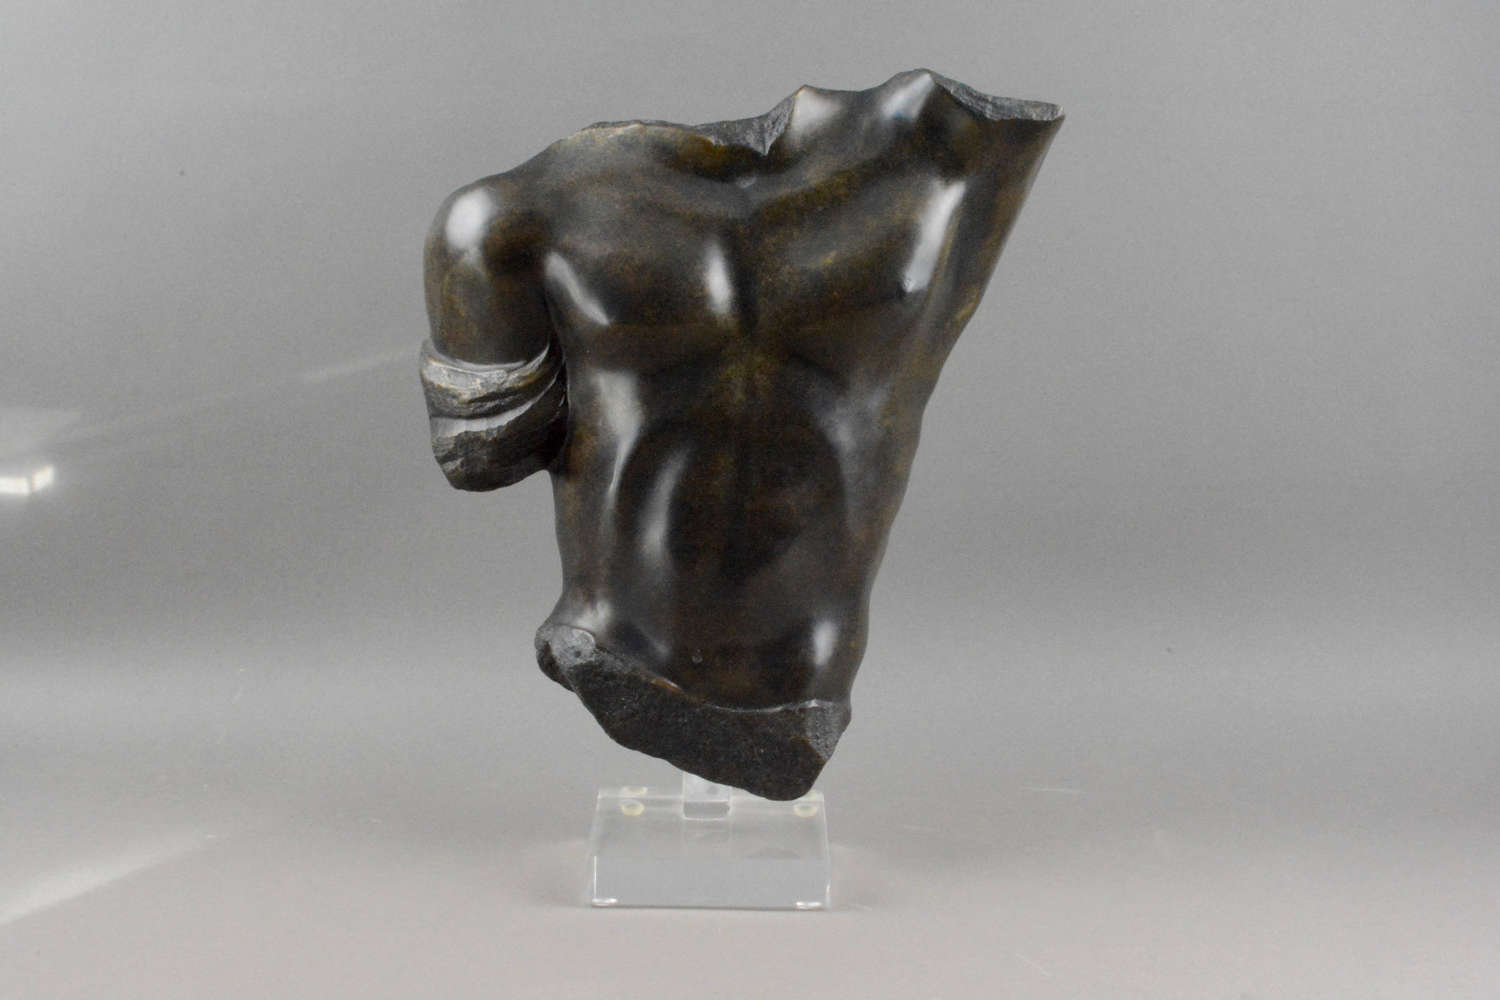 A superb vintage male torso sculpture. Cast in solid bronze